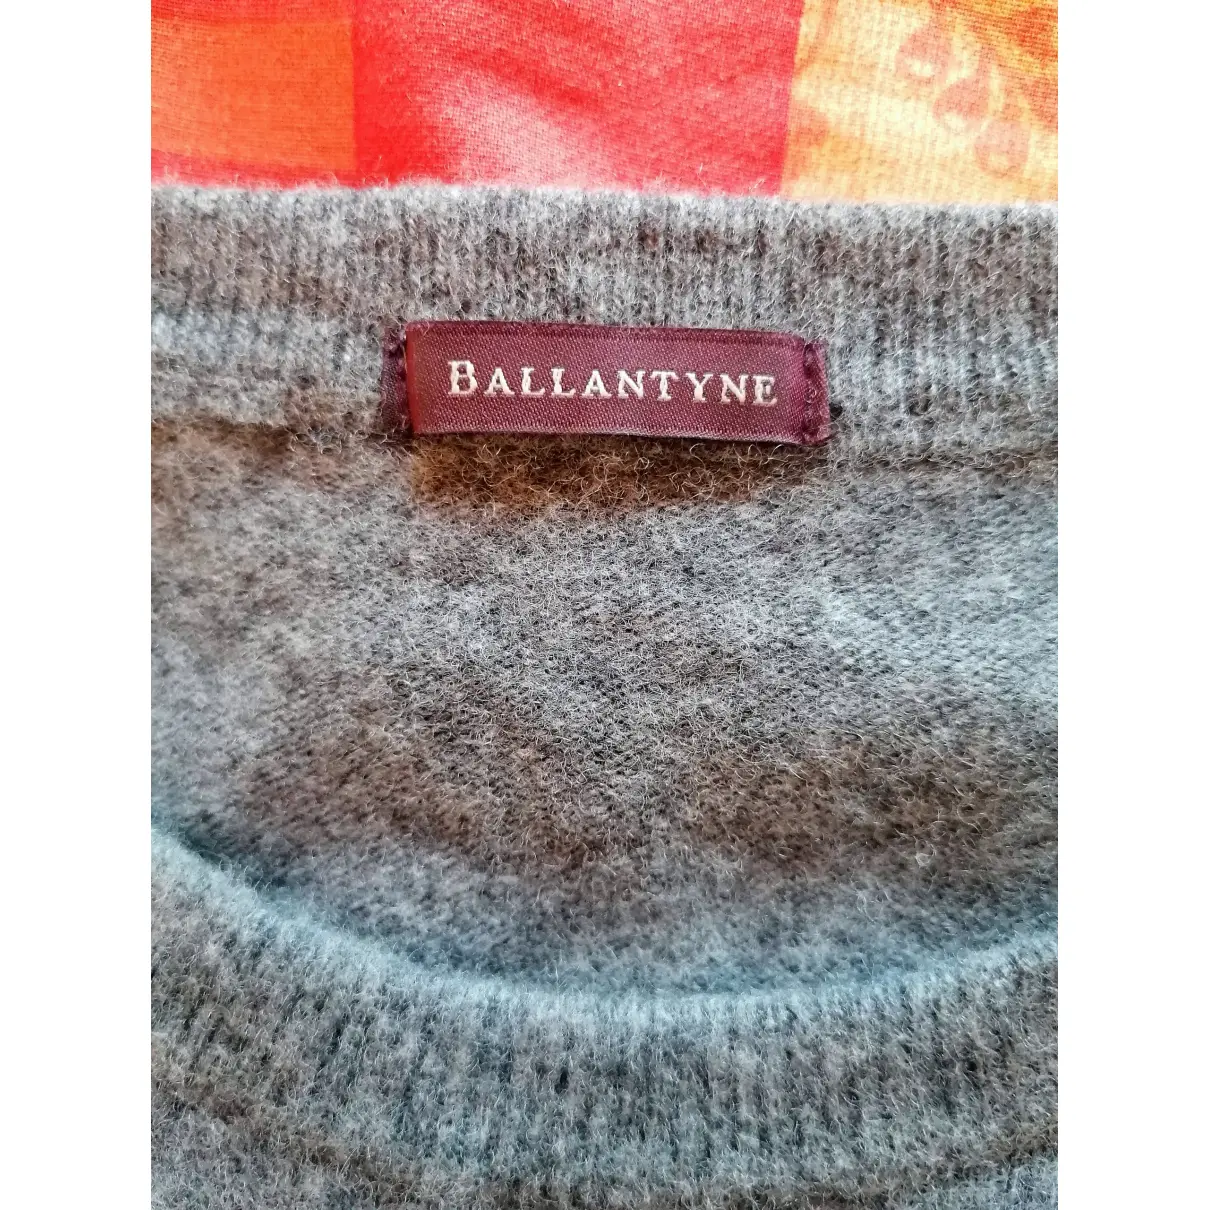 Buy Ballantyne Cashmere pull online